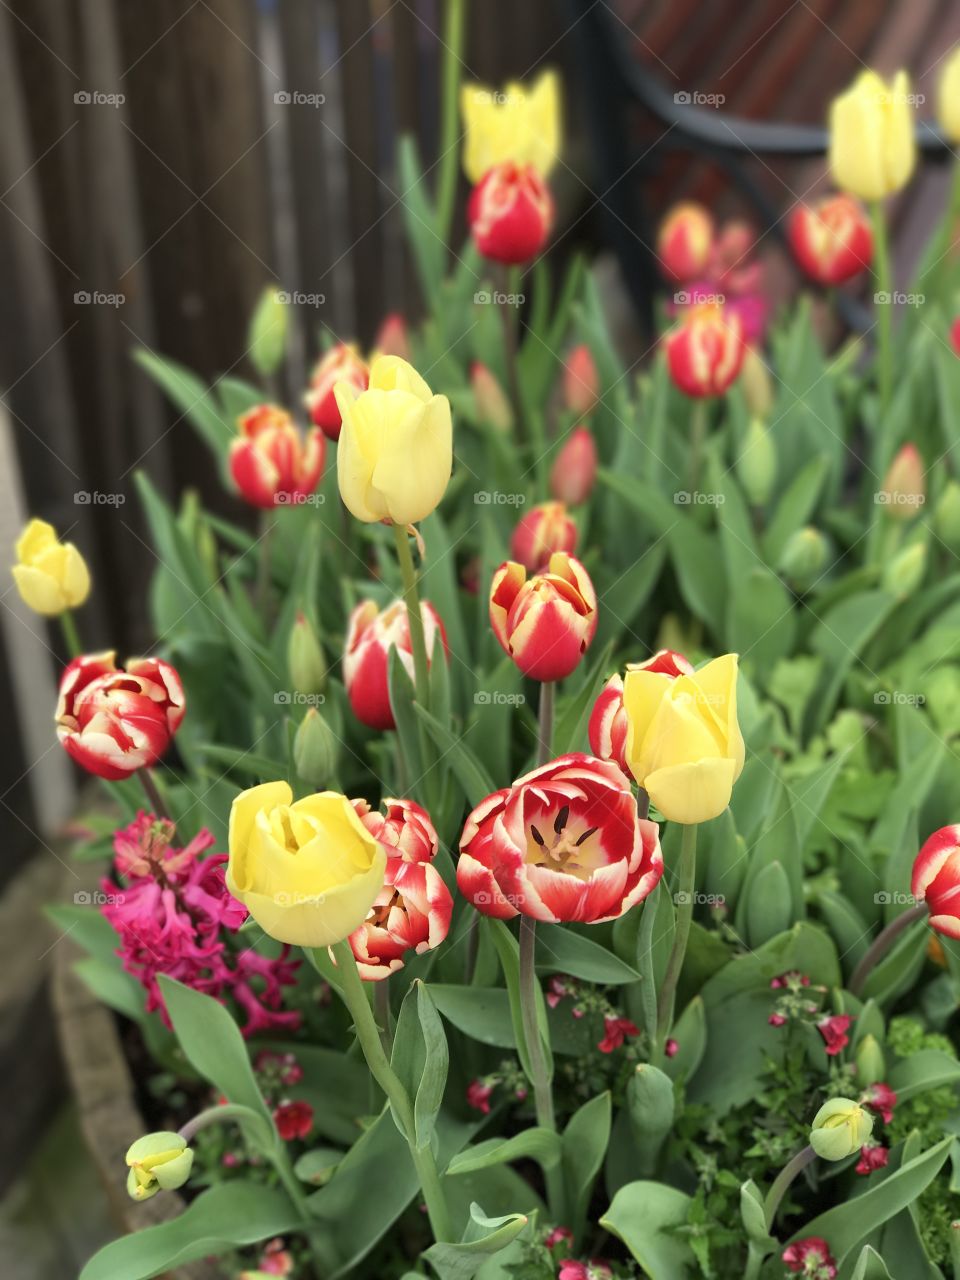 Tulip mania in San Francisco 